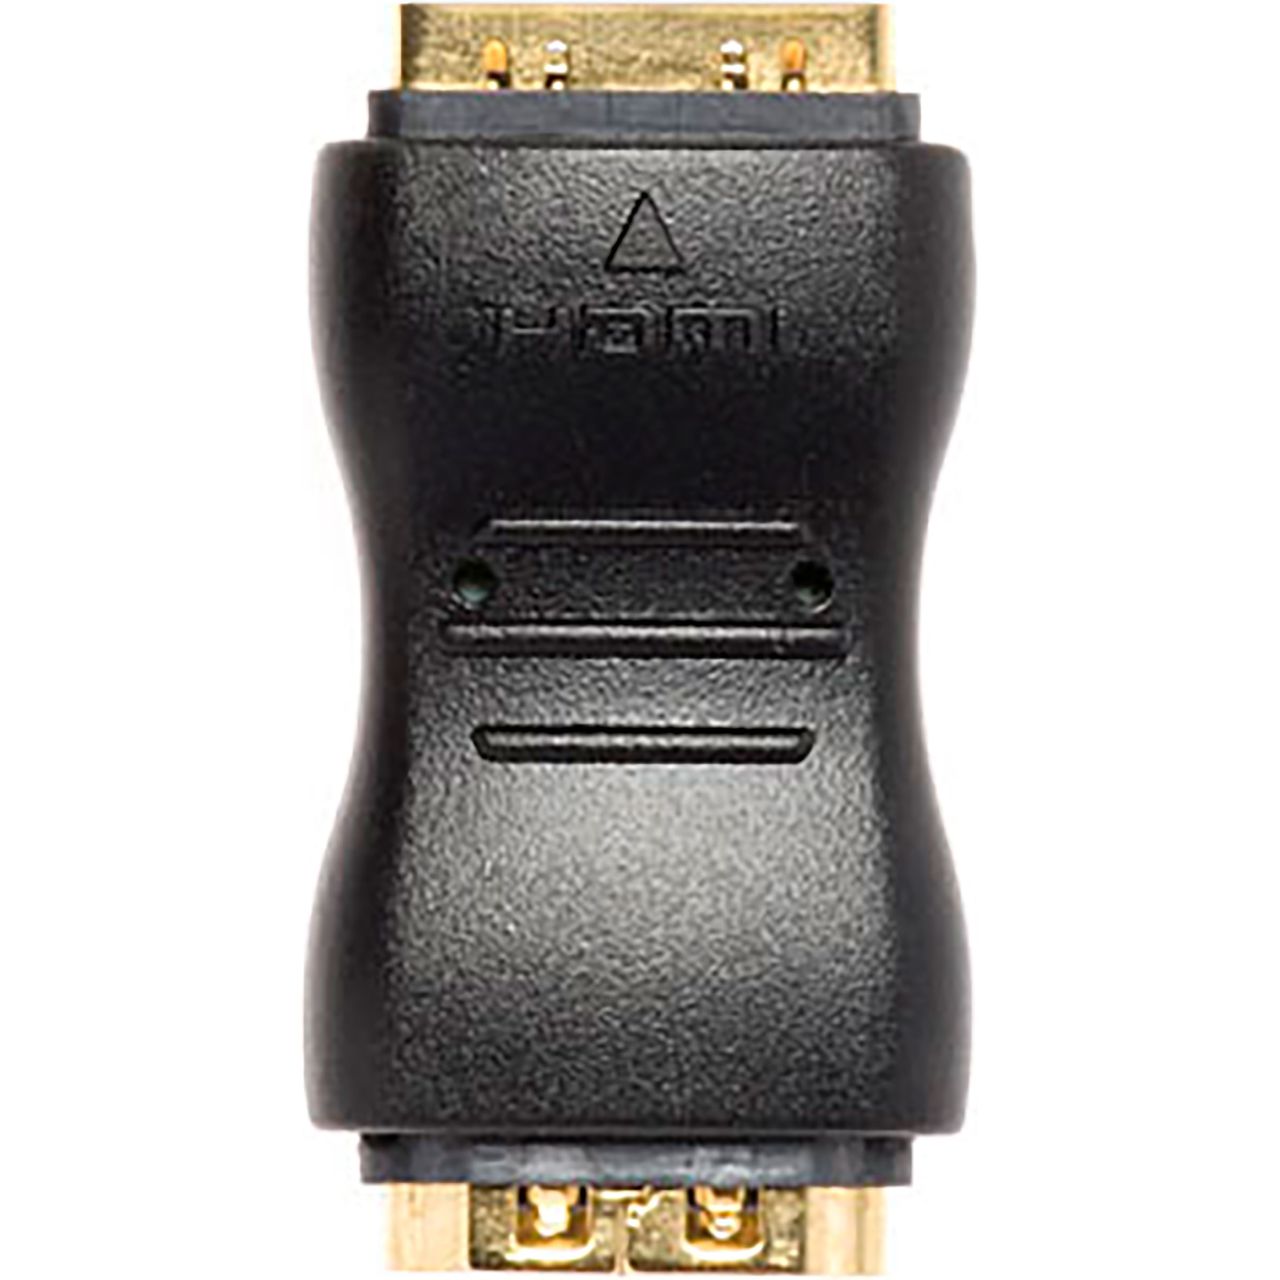 Techlink 710402 HDMI Coupler Review